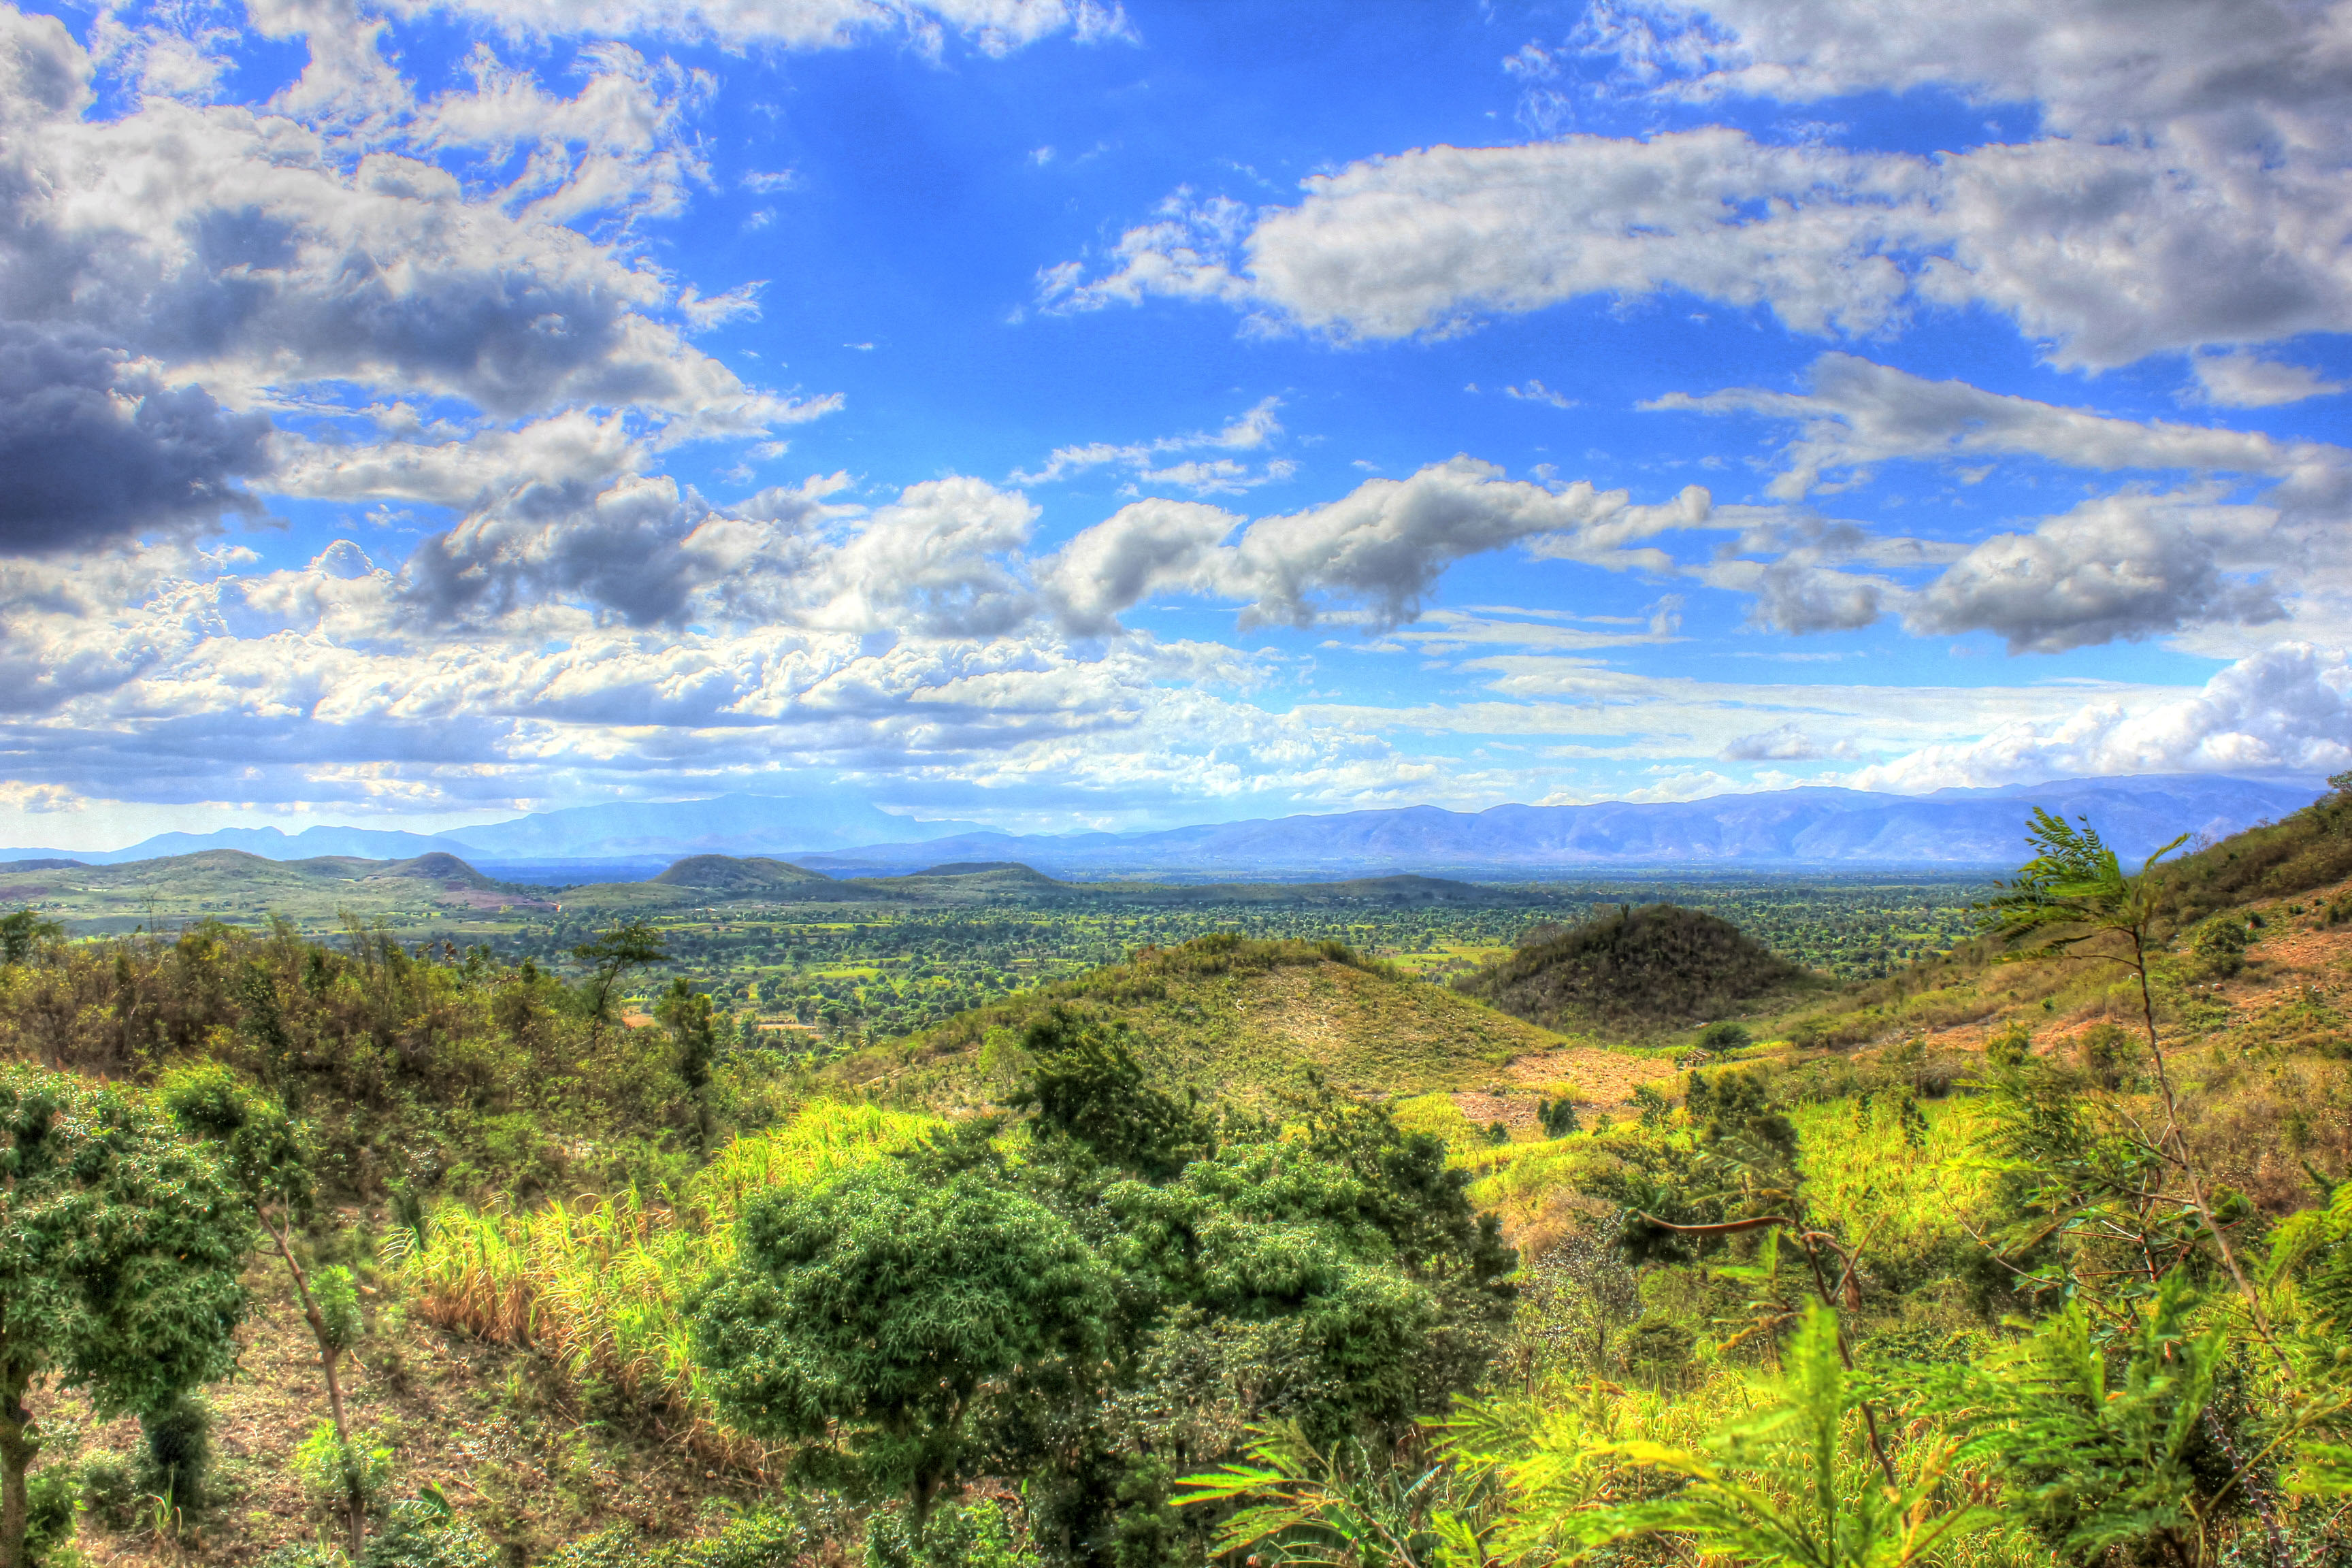 Landscape around Pignon, Haiti image - Free stock photo - Public Domain photo - CC0 Images